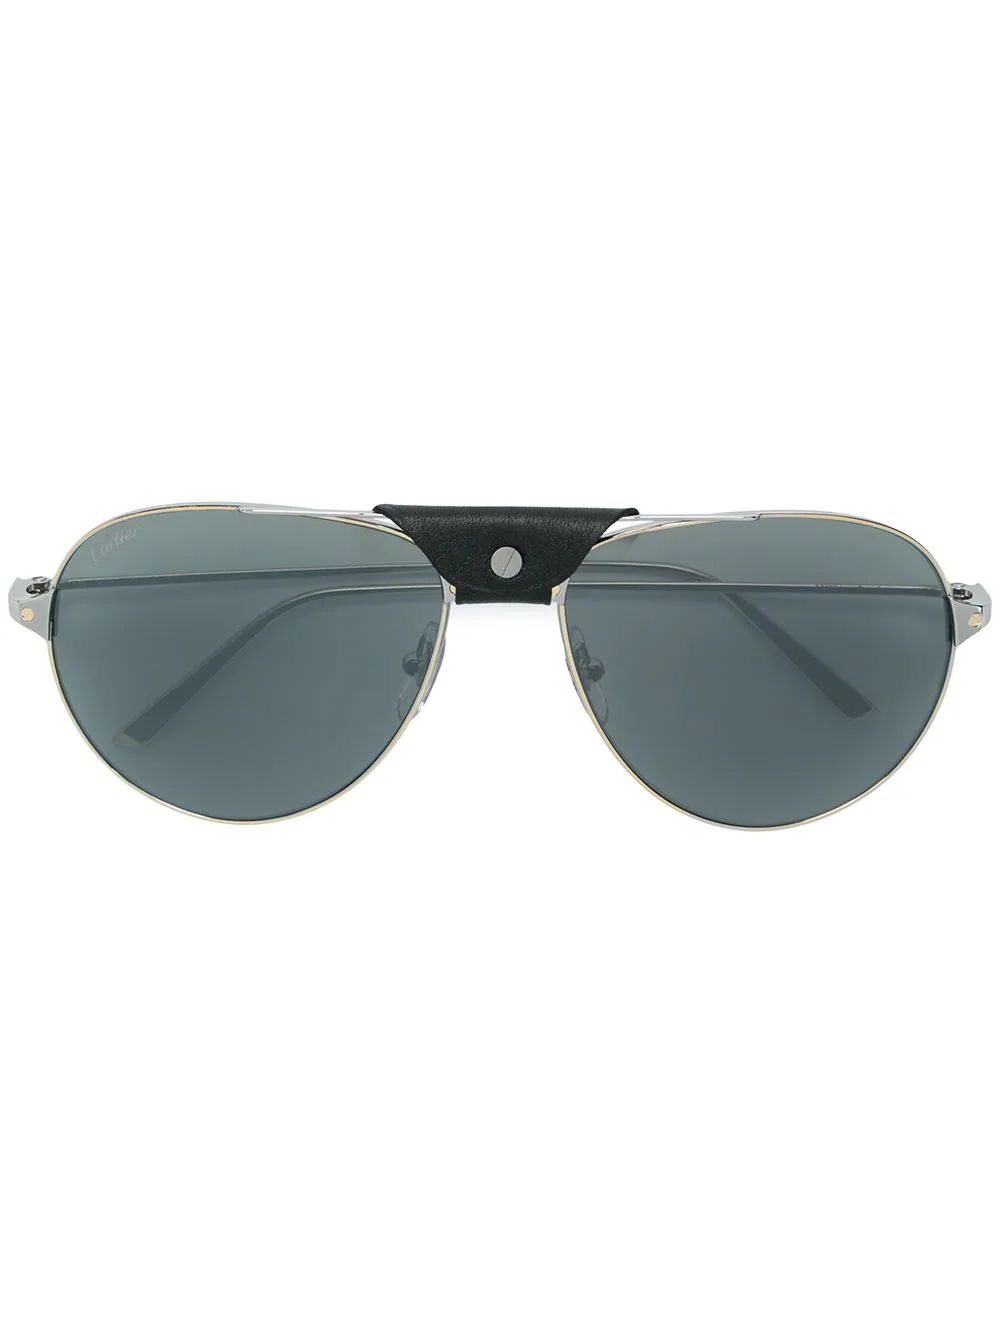 Cartier Santos de Cartier sunglasses - Metallic | FarFetch Global